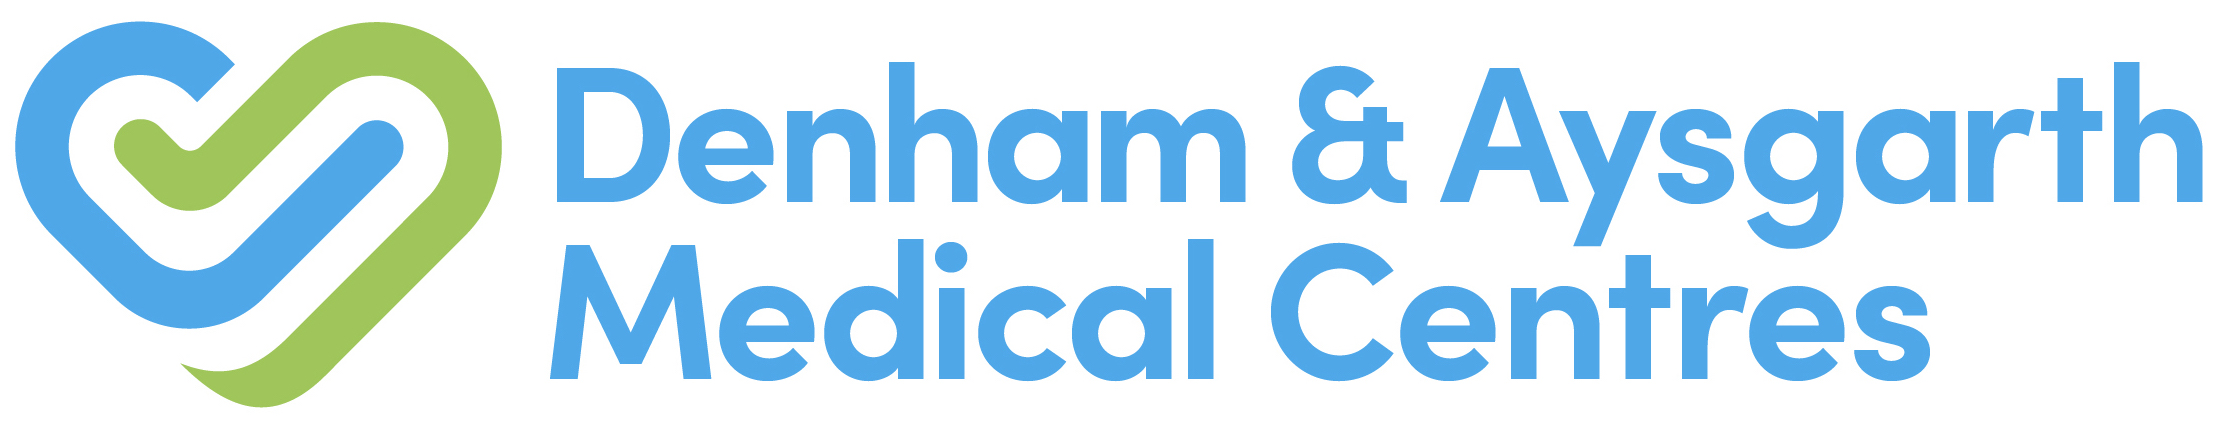 Denham & Aysgarth Medical Centre